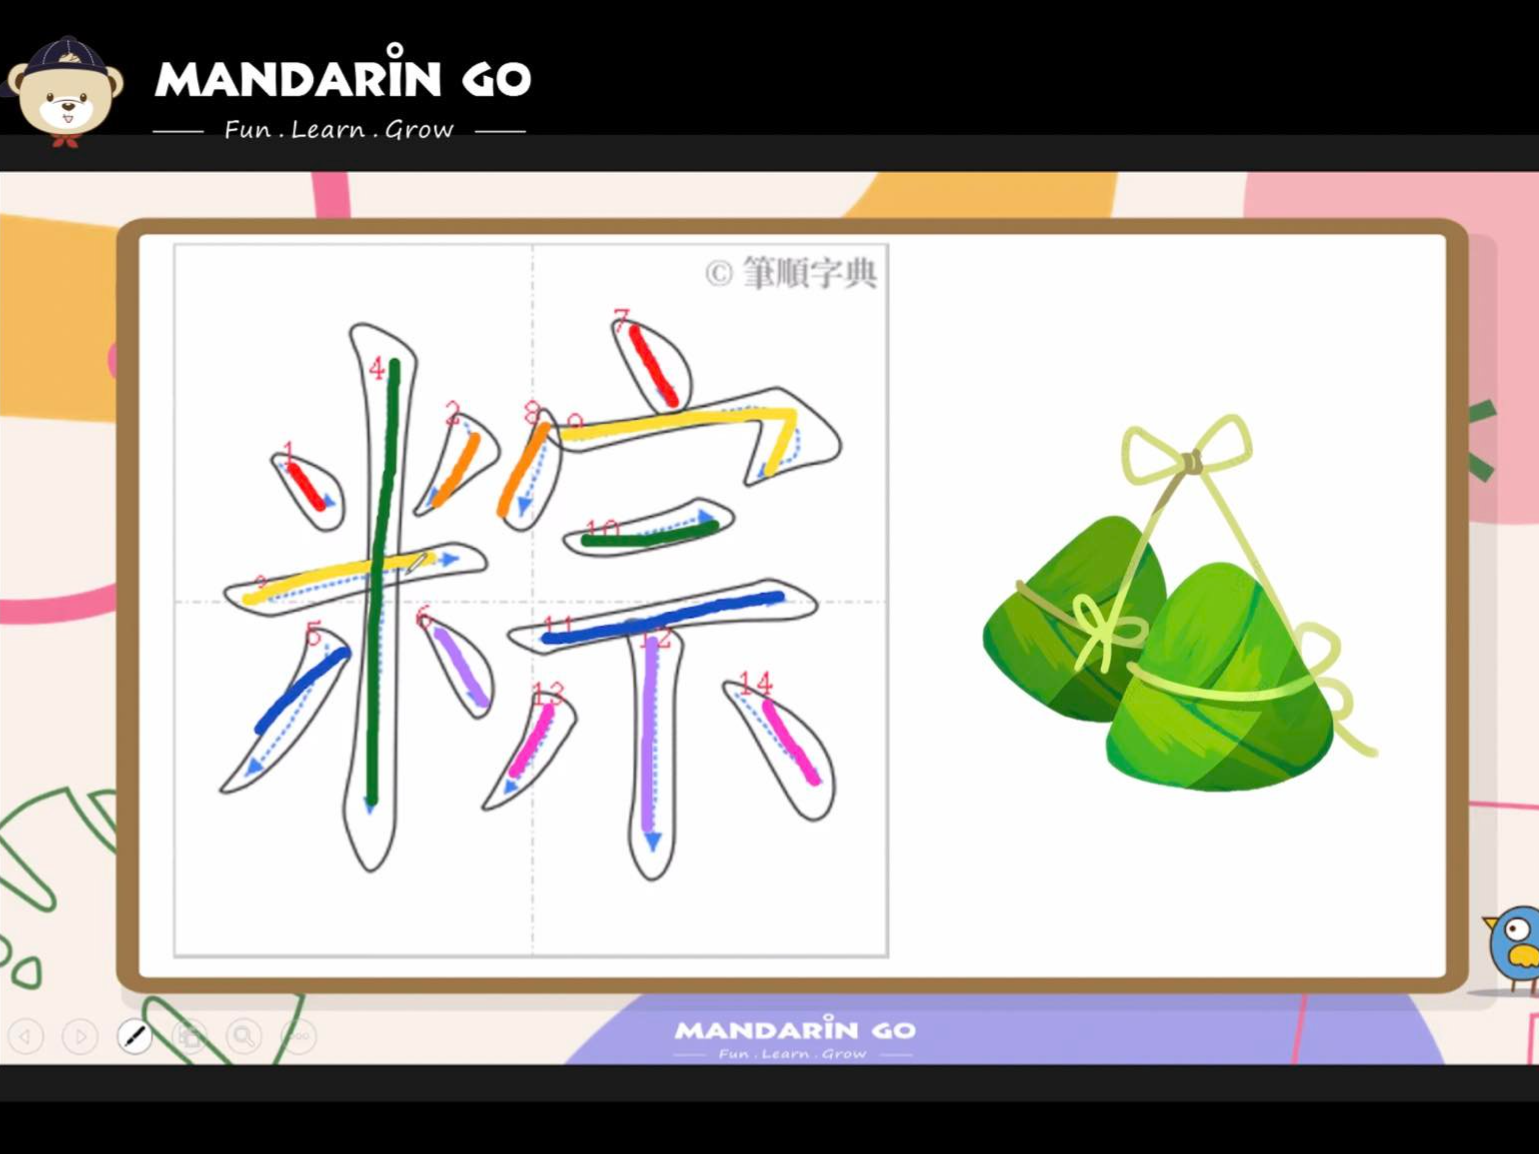 Mandarin Go 英國快樂學華語中文學校 2022 Dragon Boat Festival 端午節快樂圖片